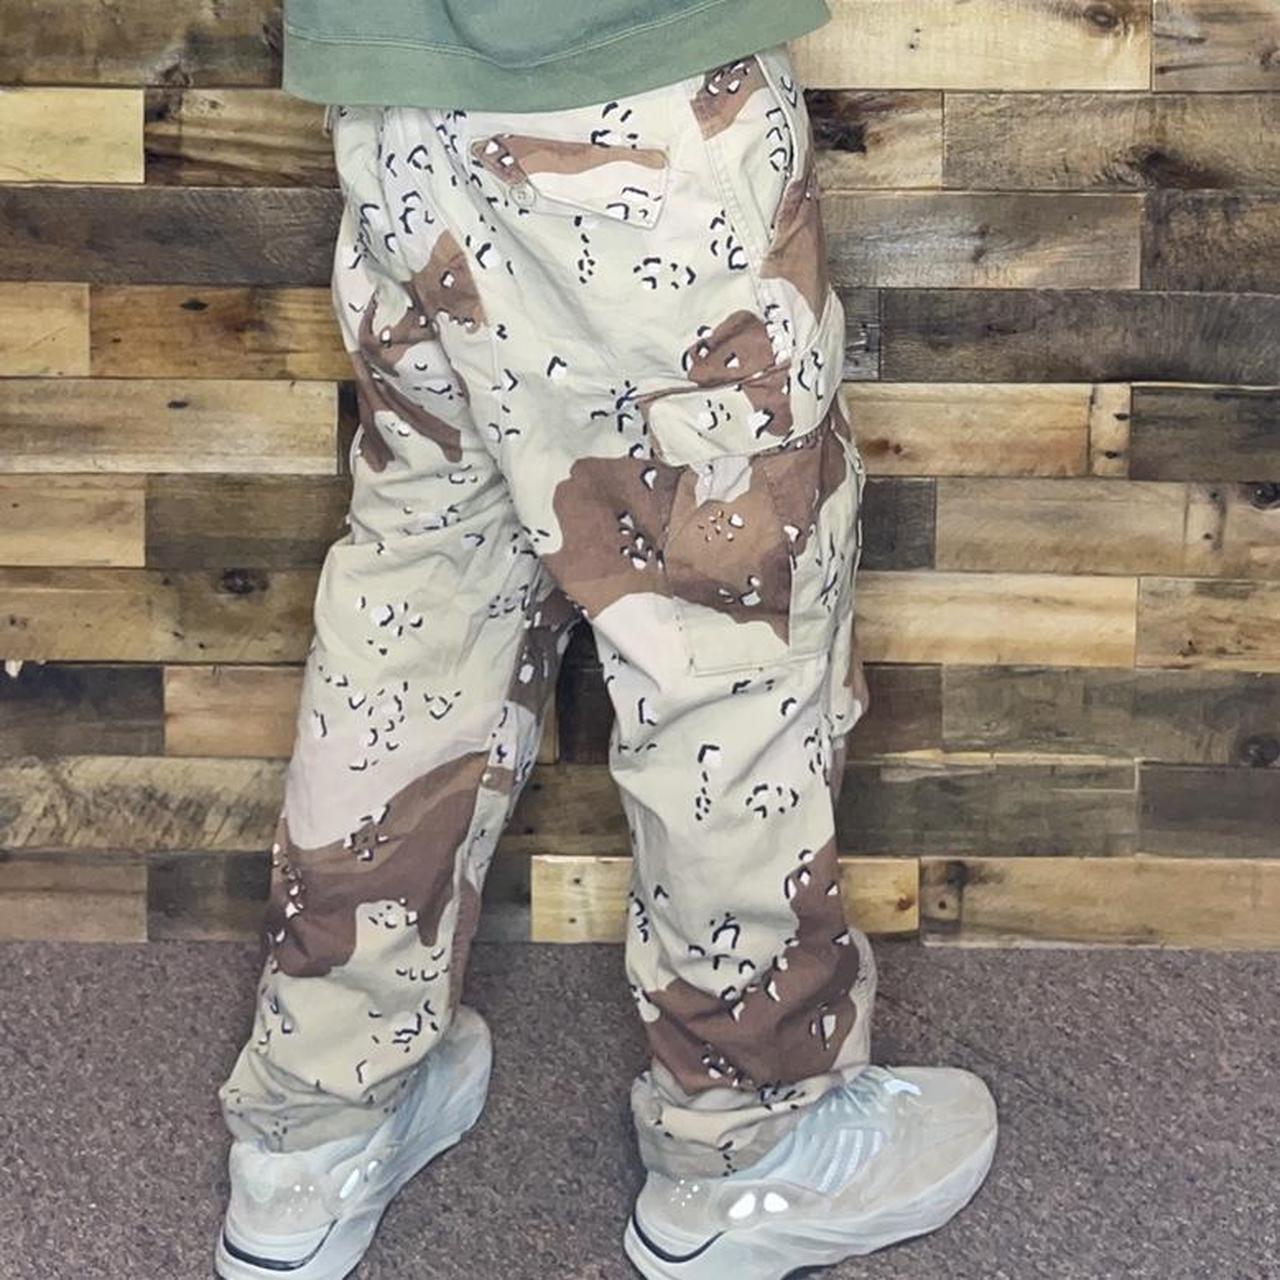 Camouflage pants military style desert camo cargo - Depop